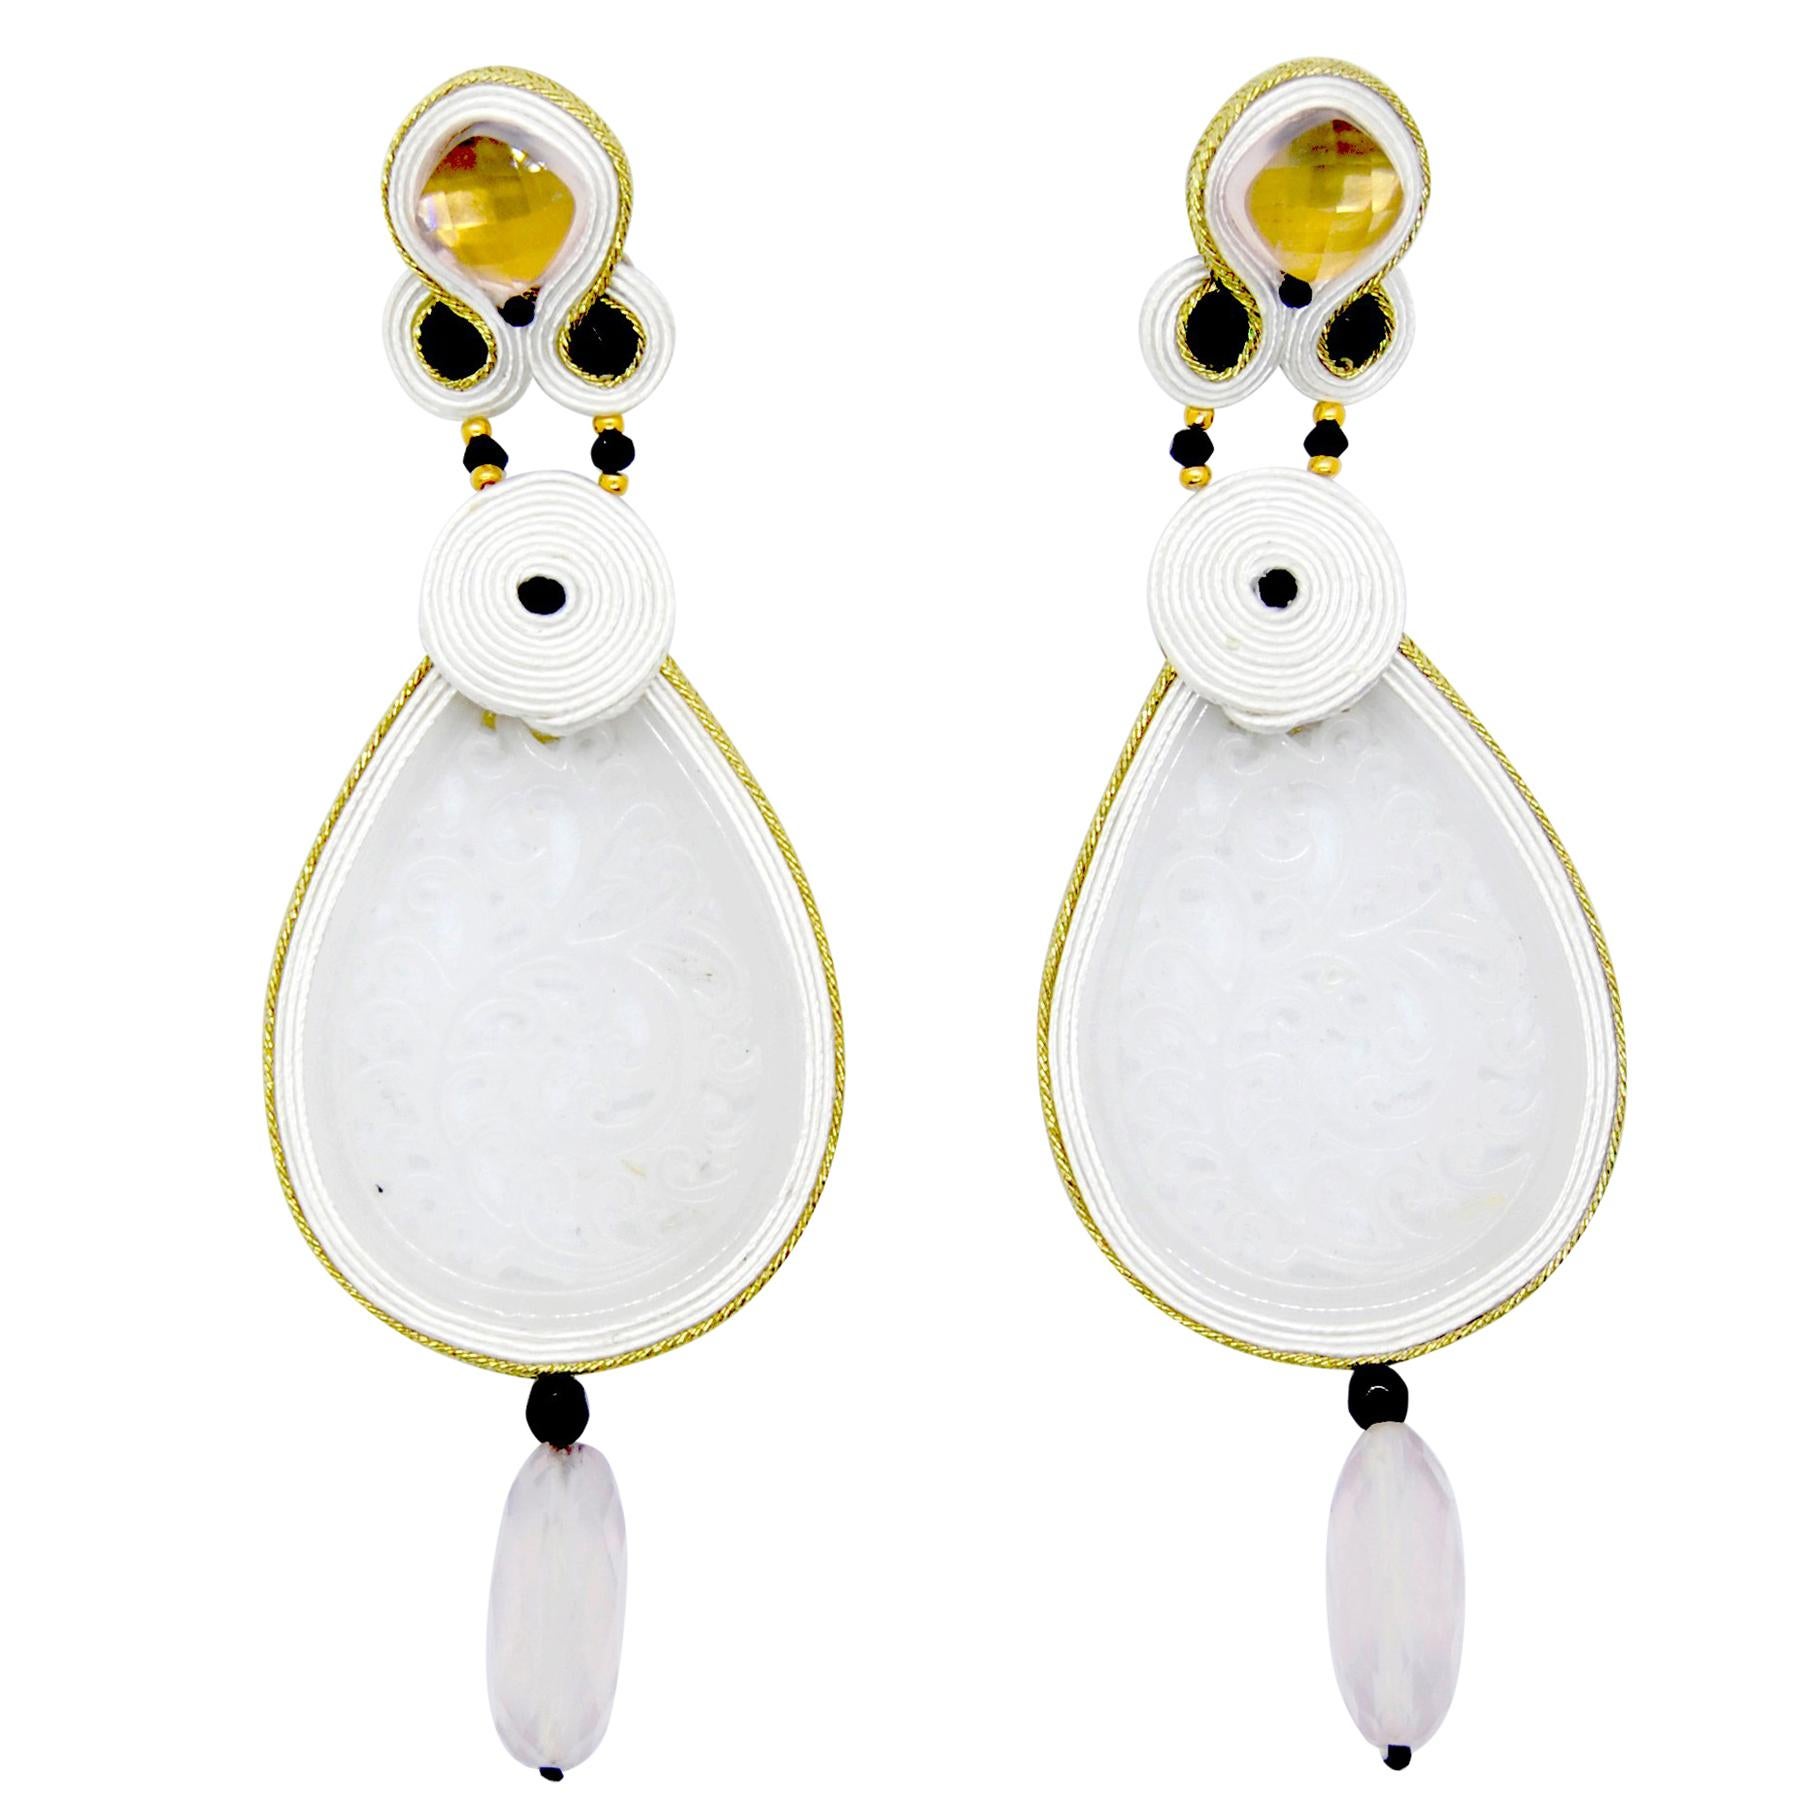 White Quartz Monokrome Collection 9 Carat Gold Earrings